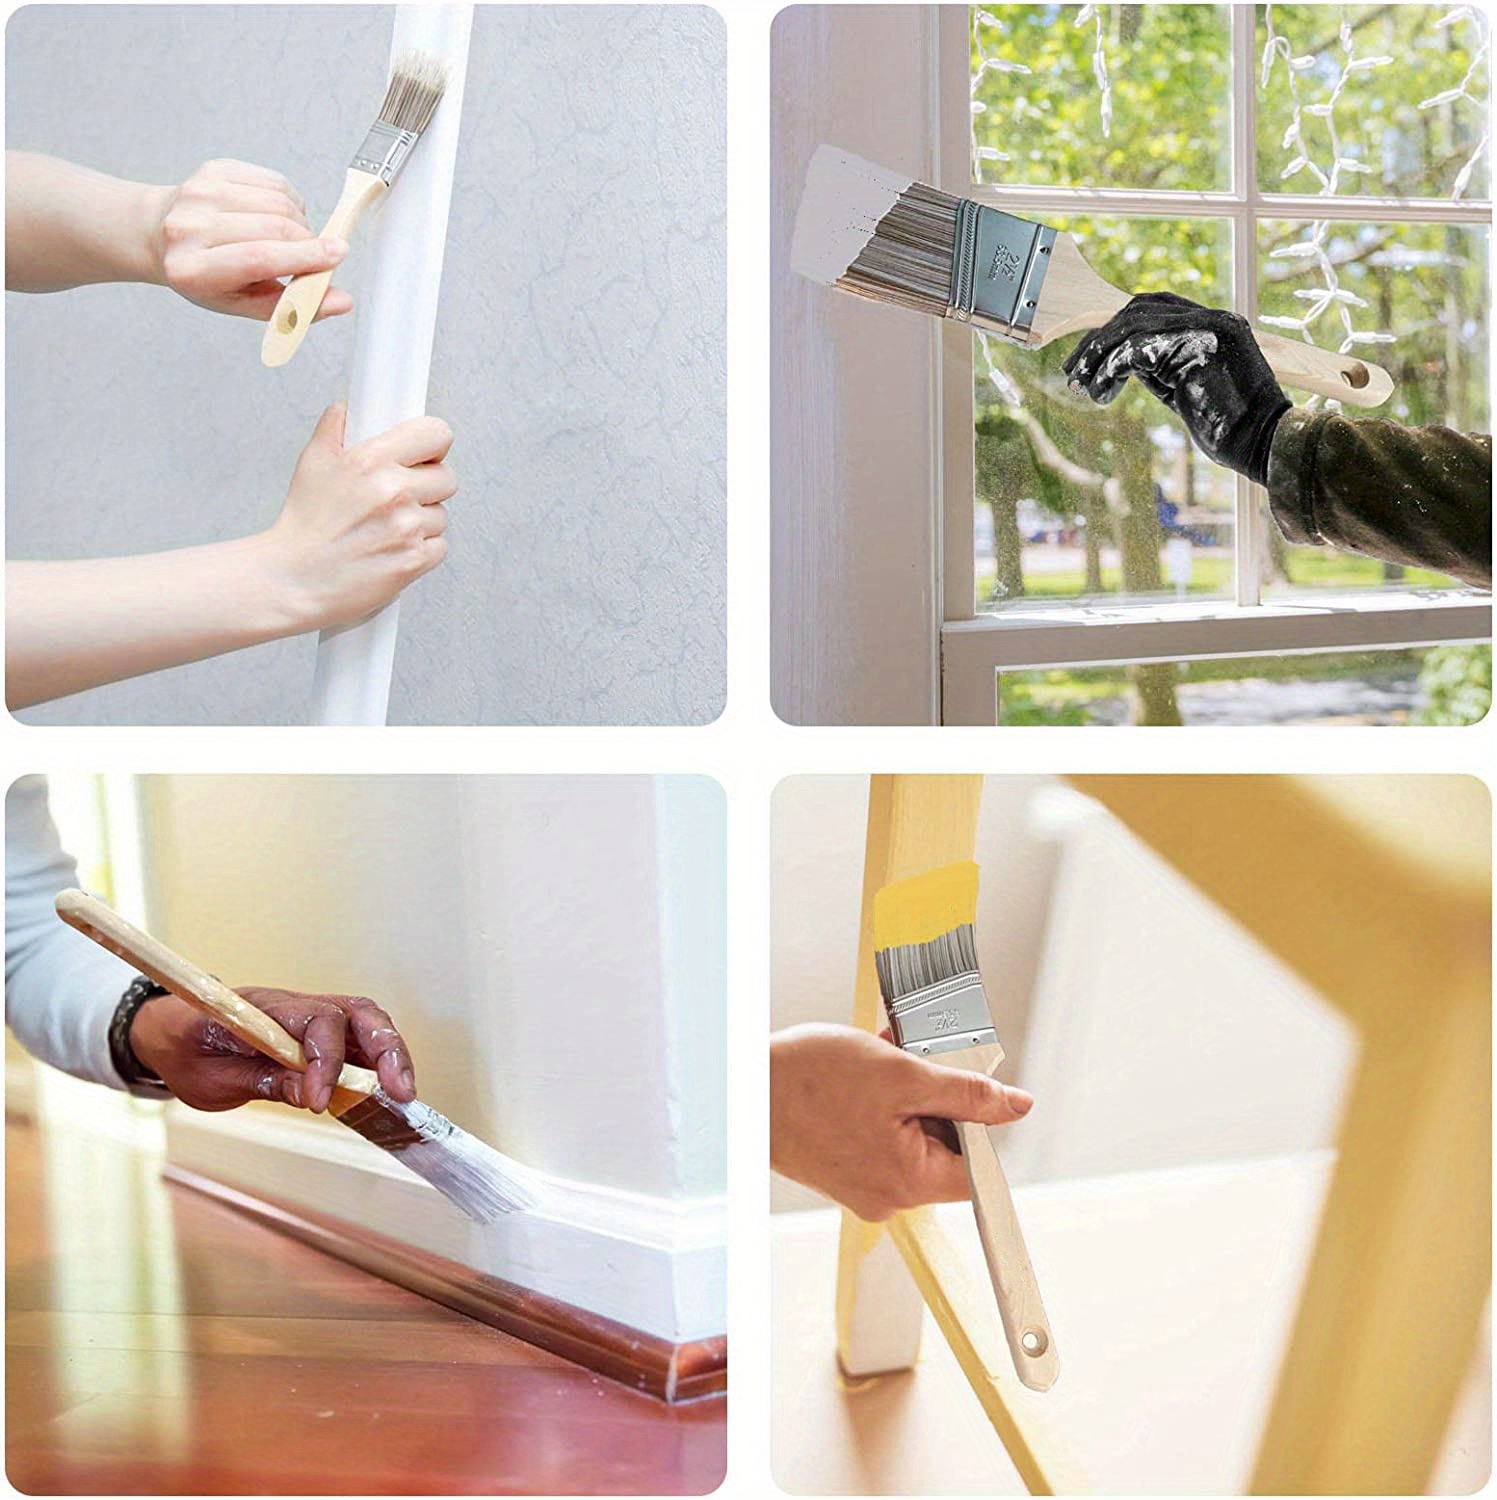 Home Wall/Trim Paint Brush Set - Includes 1 Ea of 1 Flat, 1-1/2 Angle, 2  Stubby Angle, 2 Flat & 2-1/2 Angle